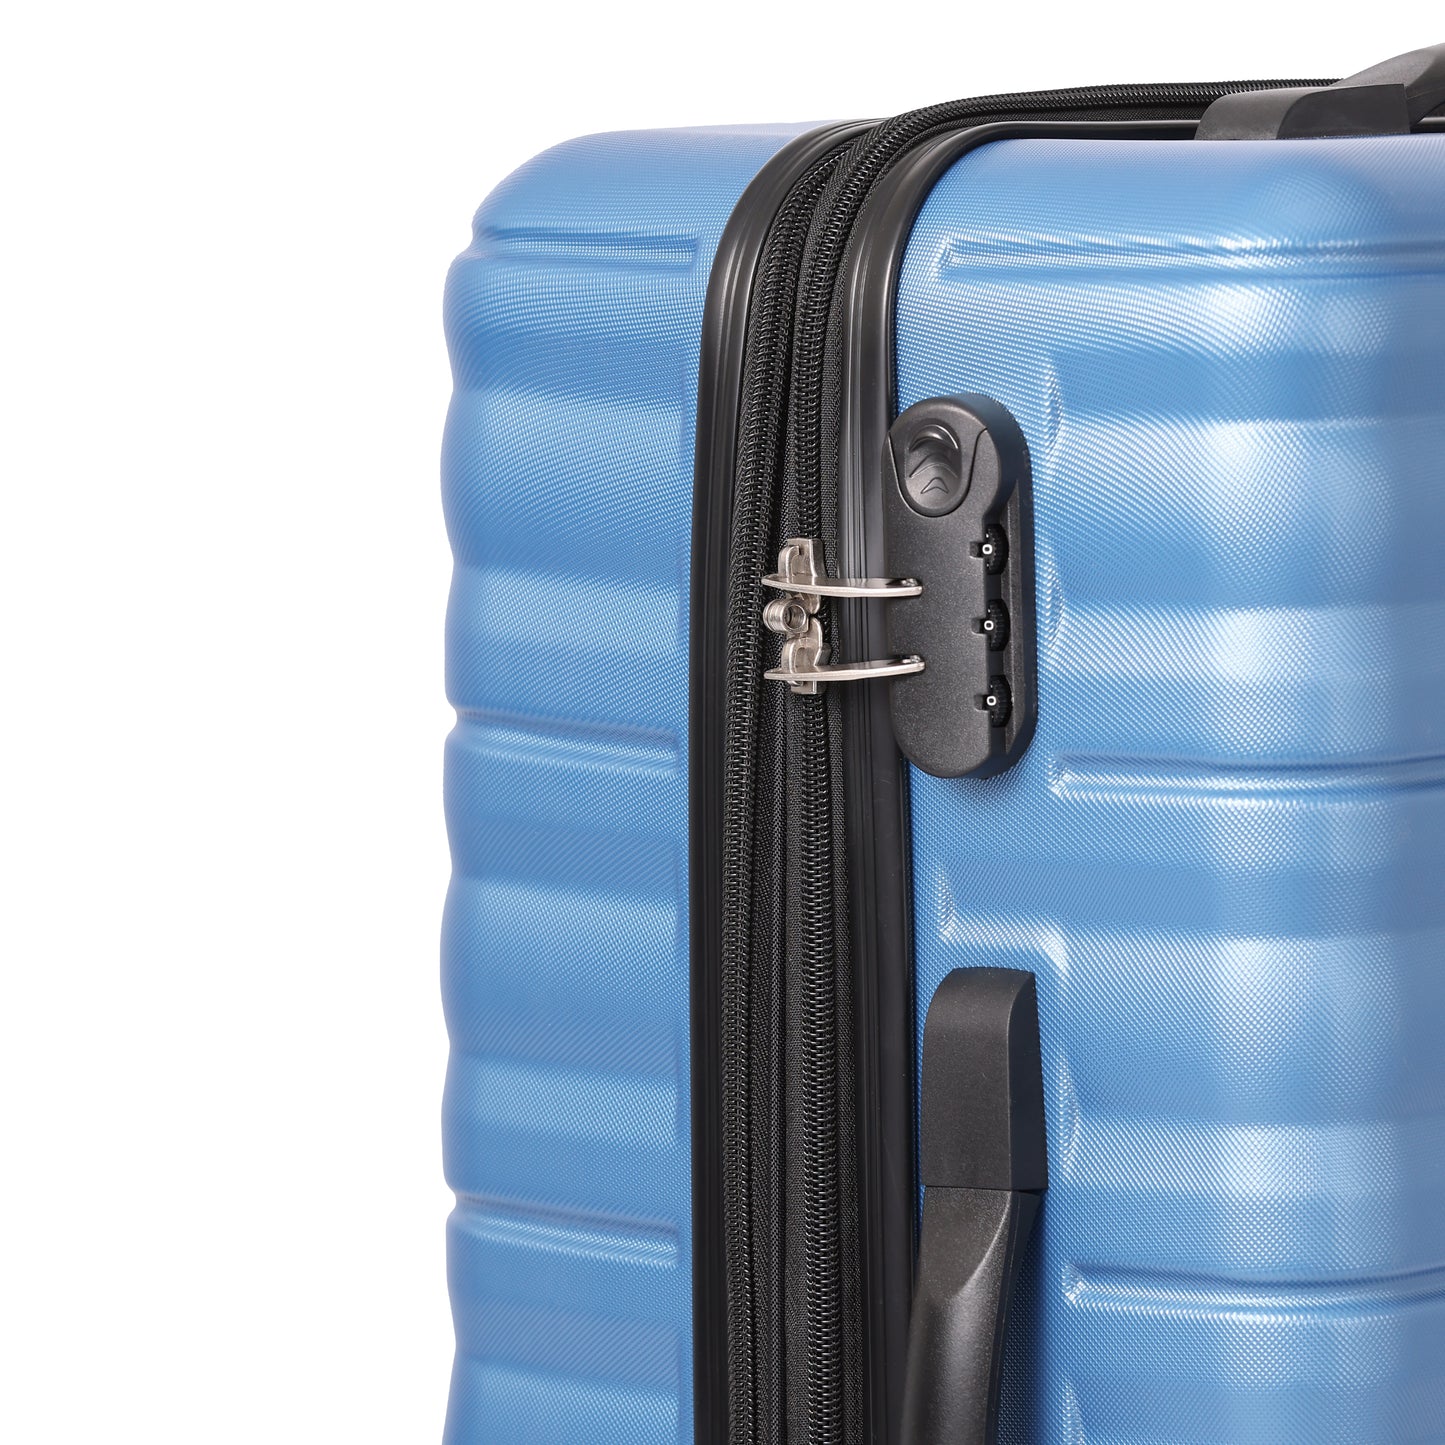 Cosmo Starline 24 Hard Luggage Trolley Case